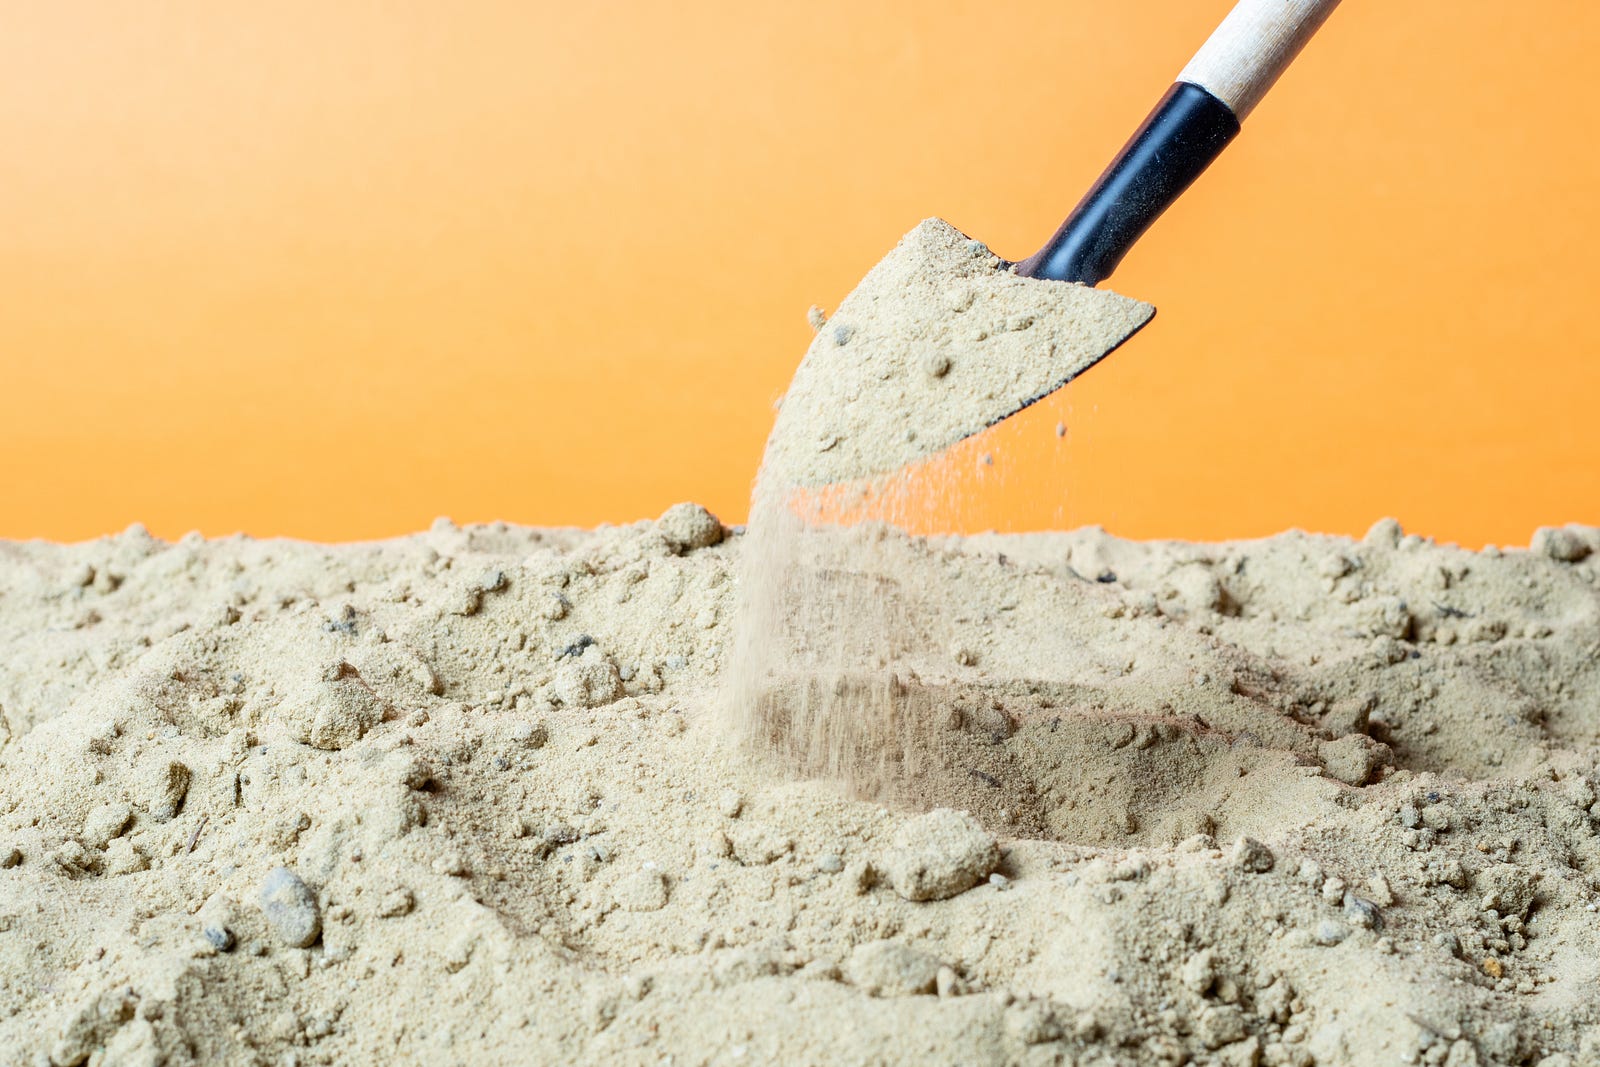 A shovel digging up a scoop of sand